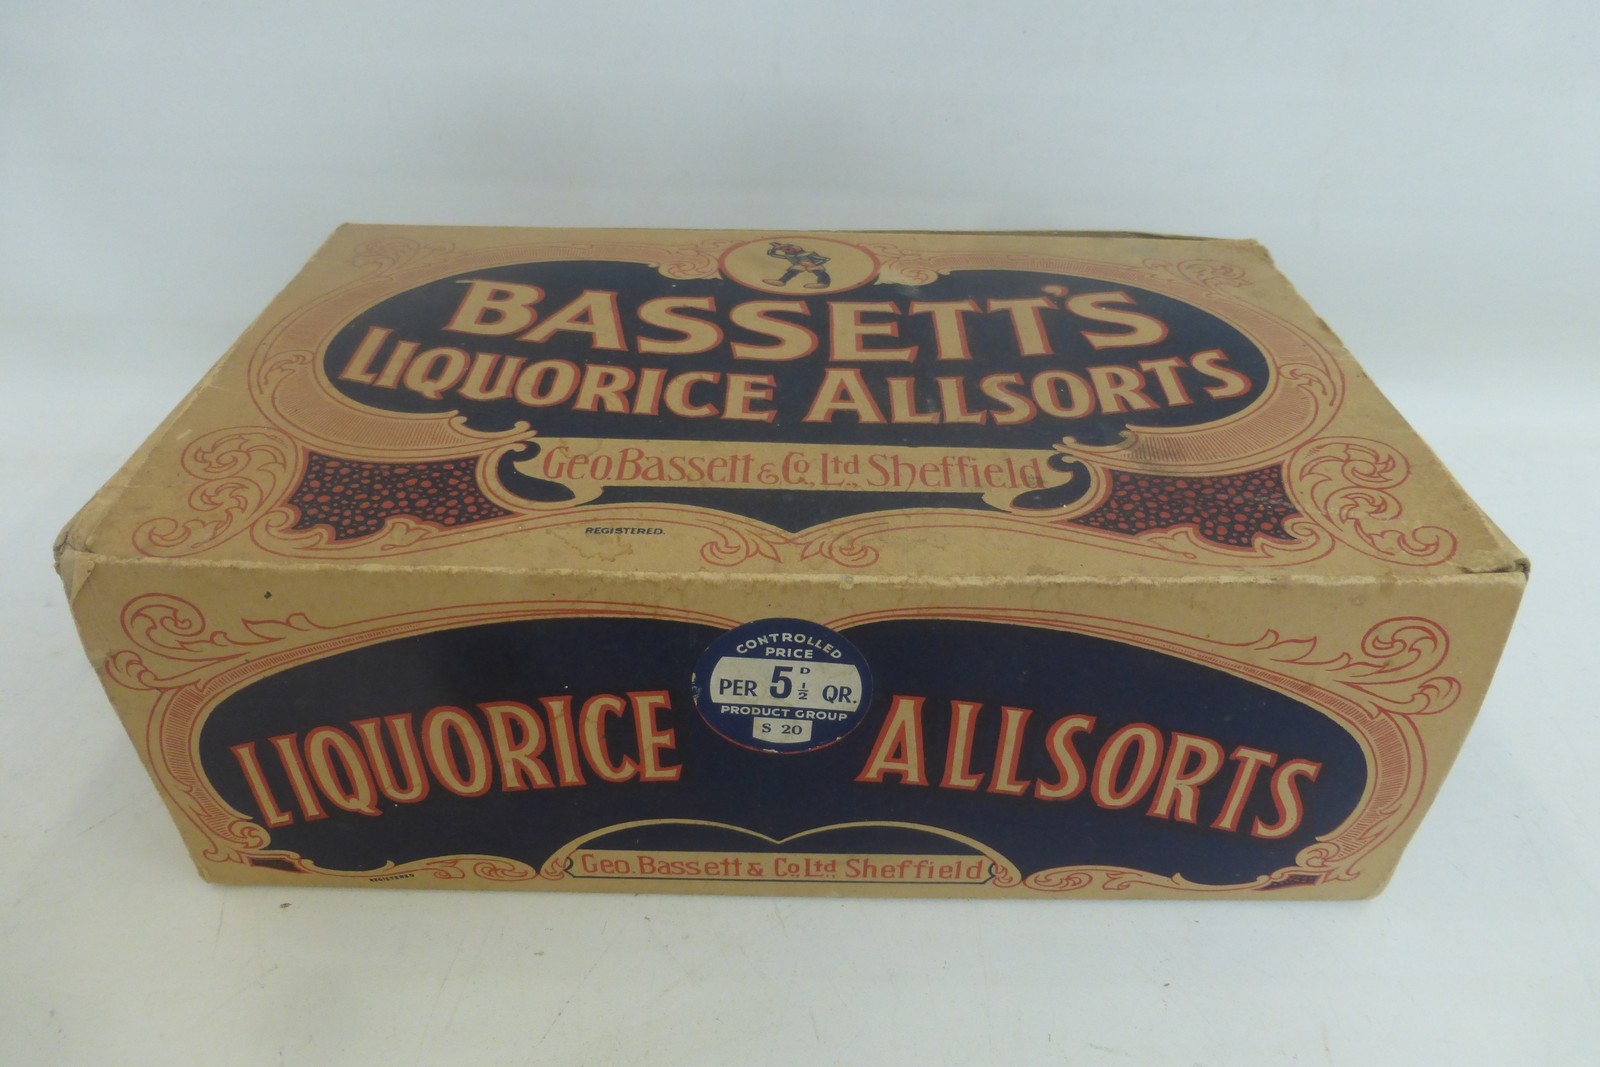 A Bassett's Liquorice Allsorts cardboard dispensing box.